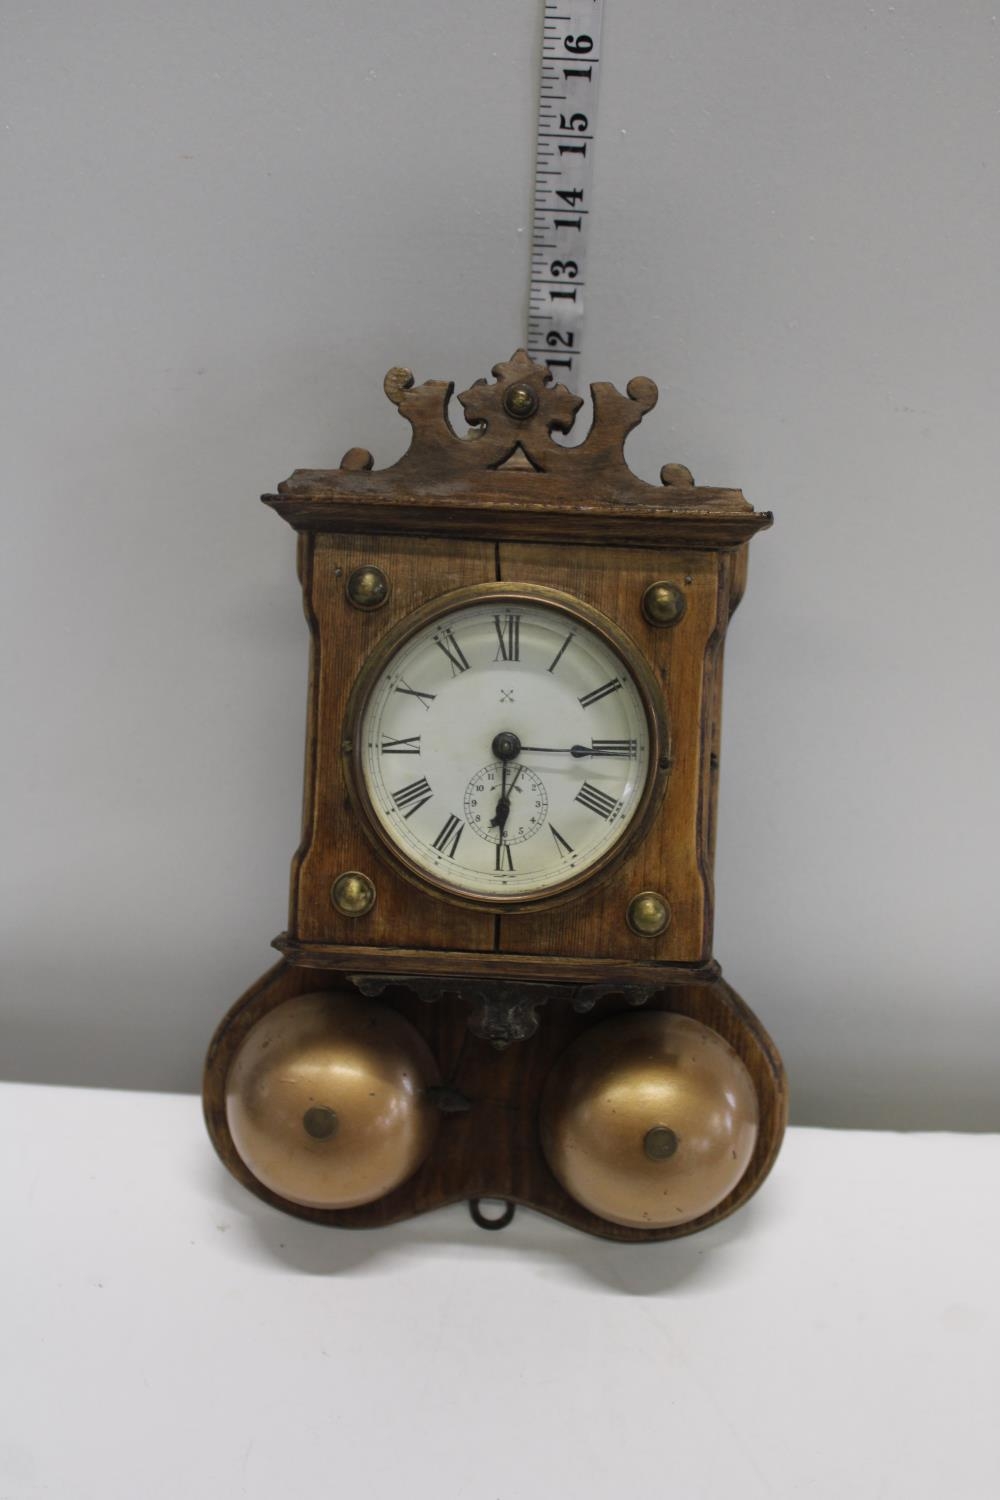 A German made chiming wall clock a/f